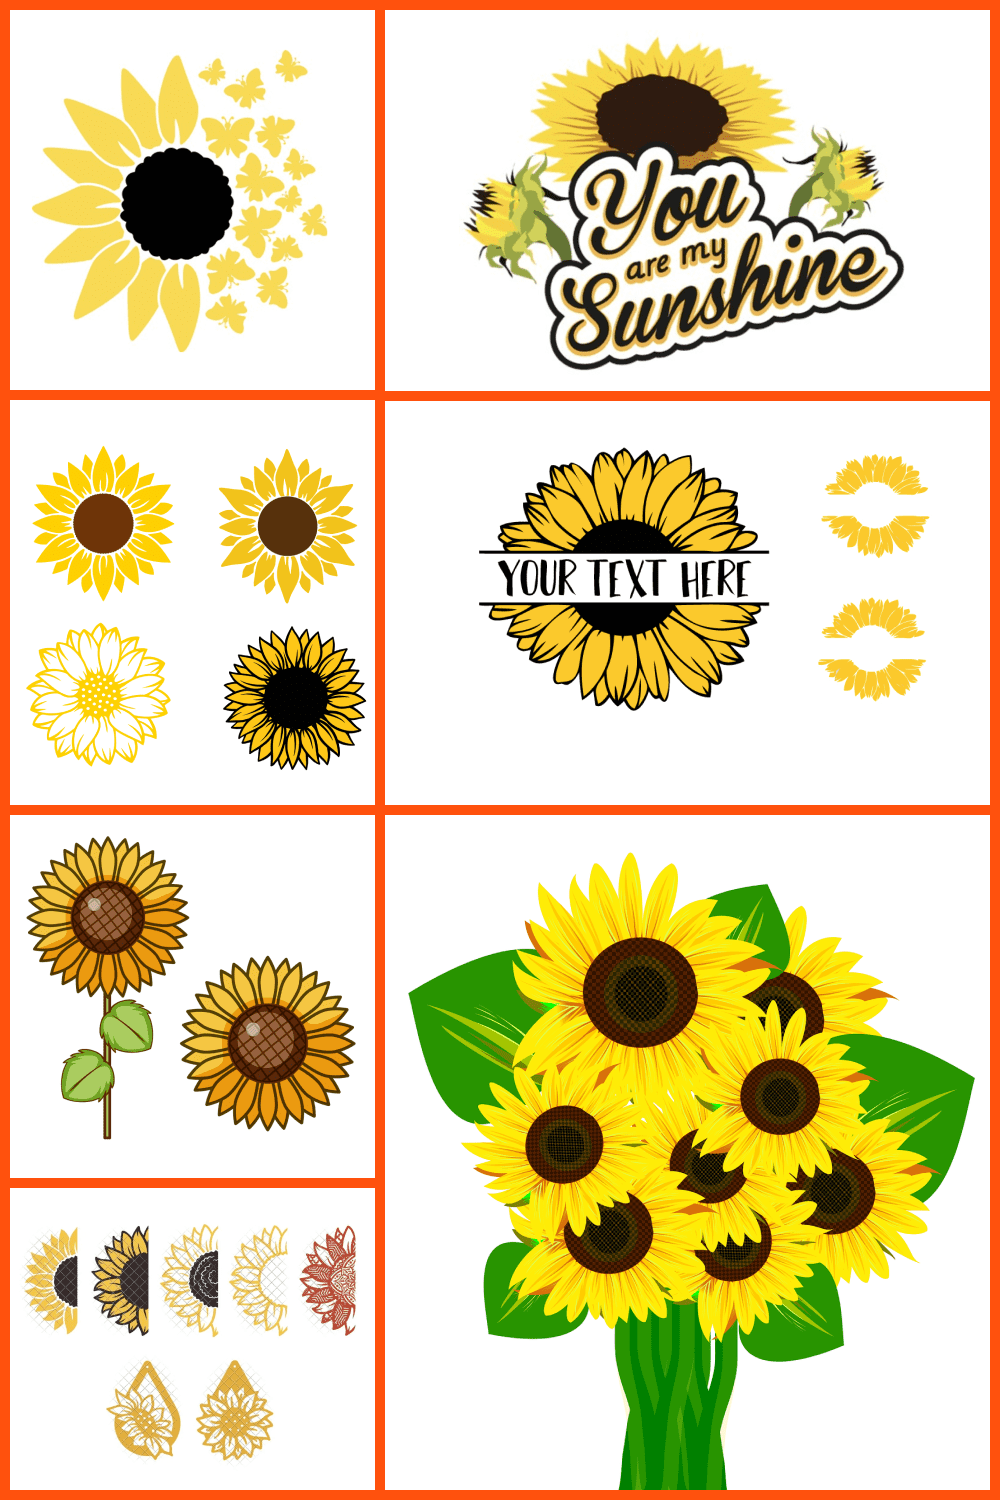 Sunflower SVG Images Pinterest.